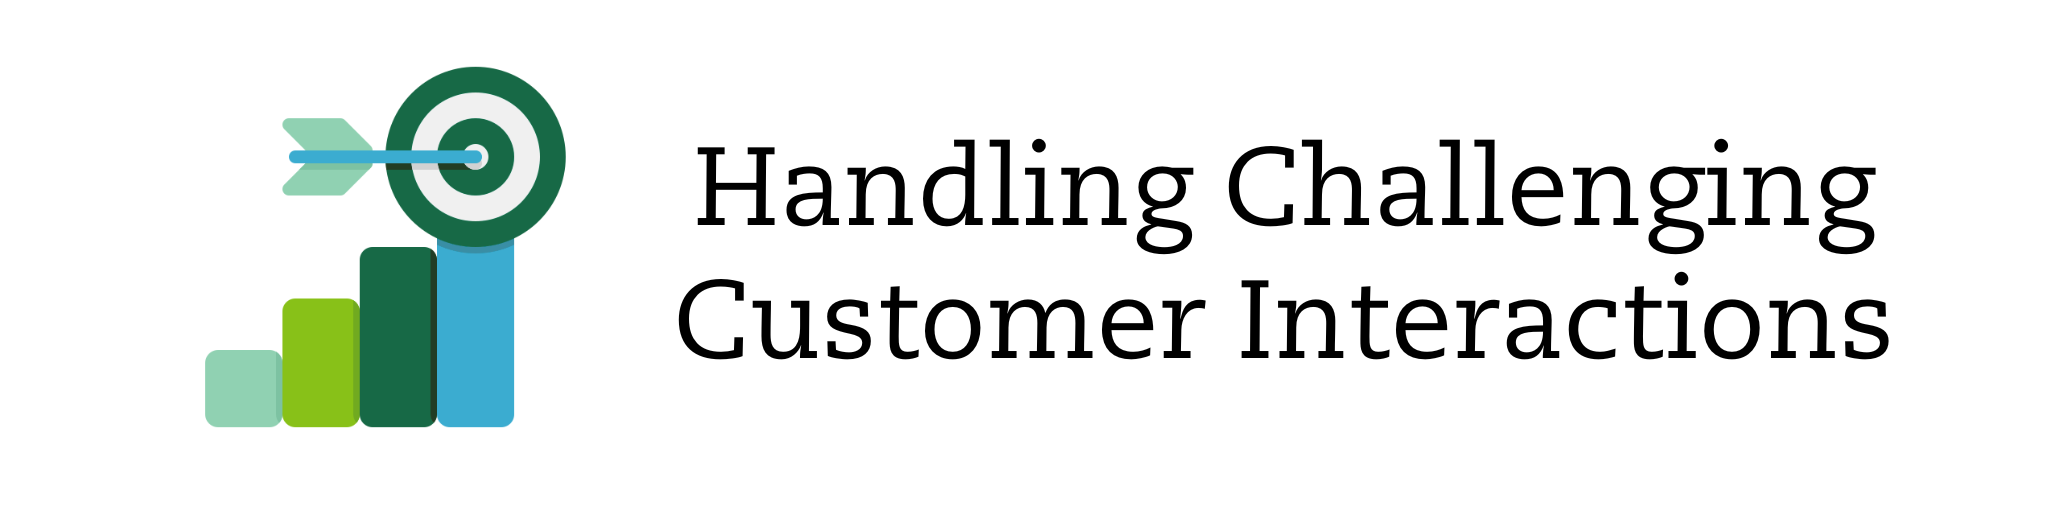 Handling-Challenging-Customer-Interactions Landing Page Banner